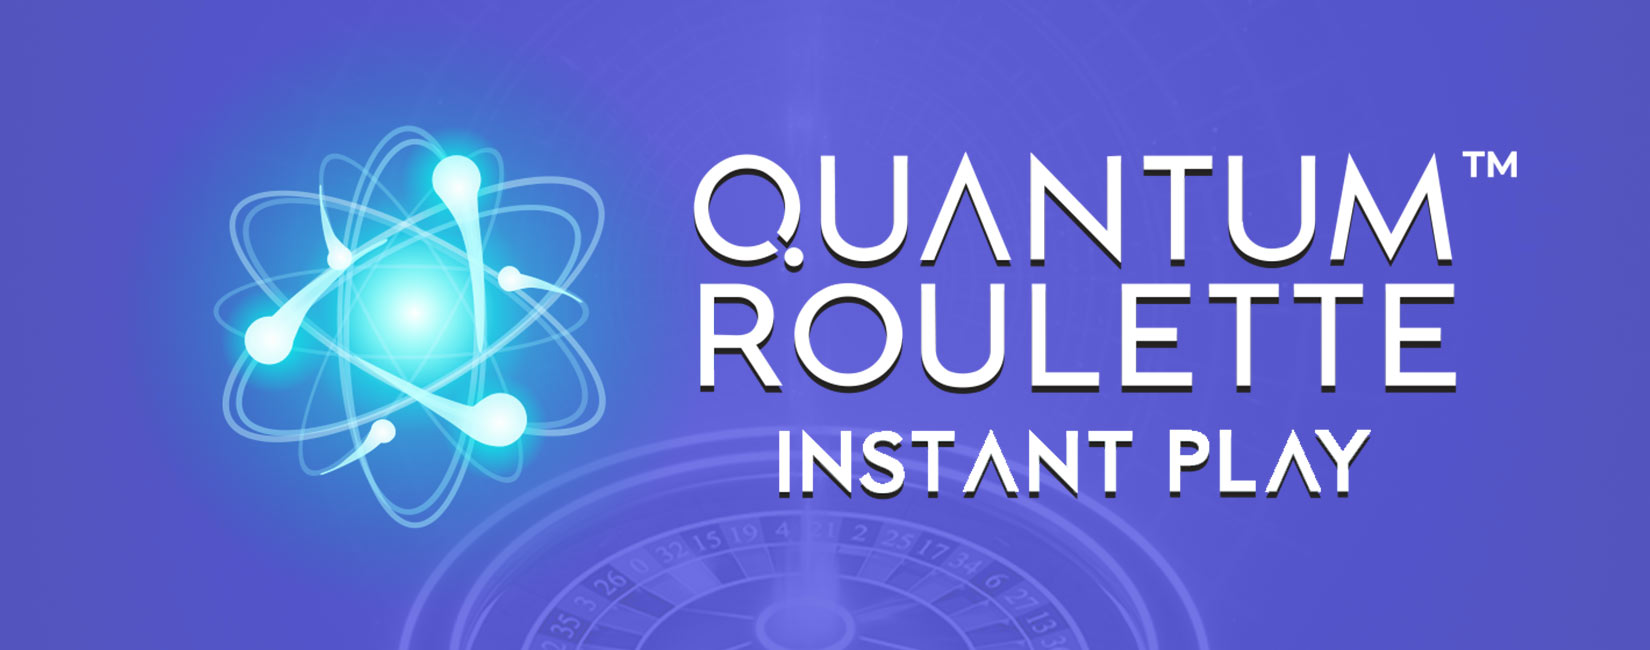 CRE-287823-January Reviews-Quantum Roulette Instant Play-sitecore-1650x650